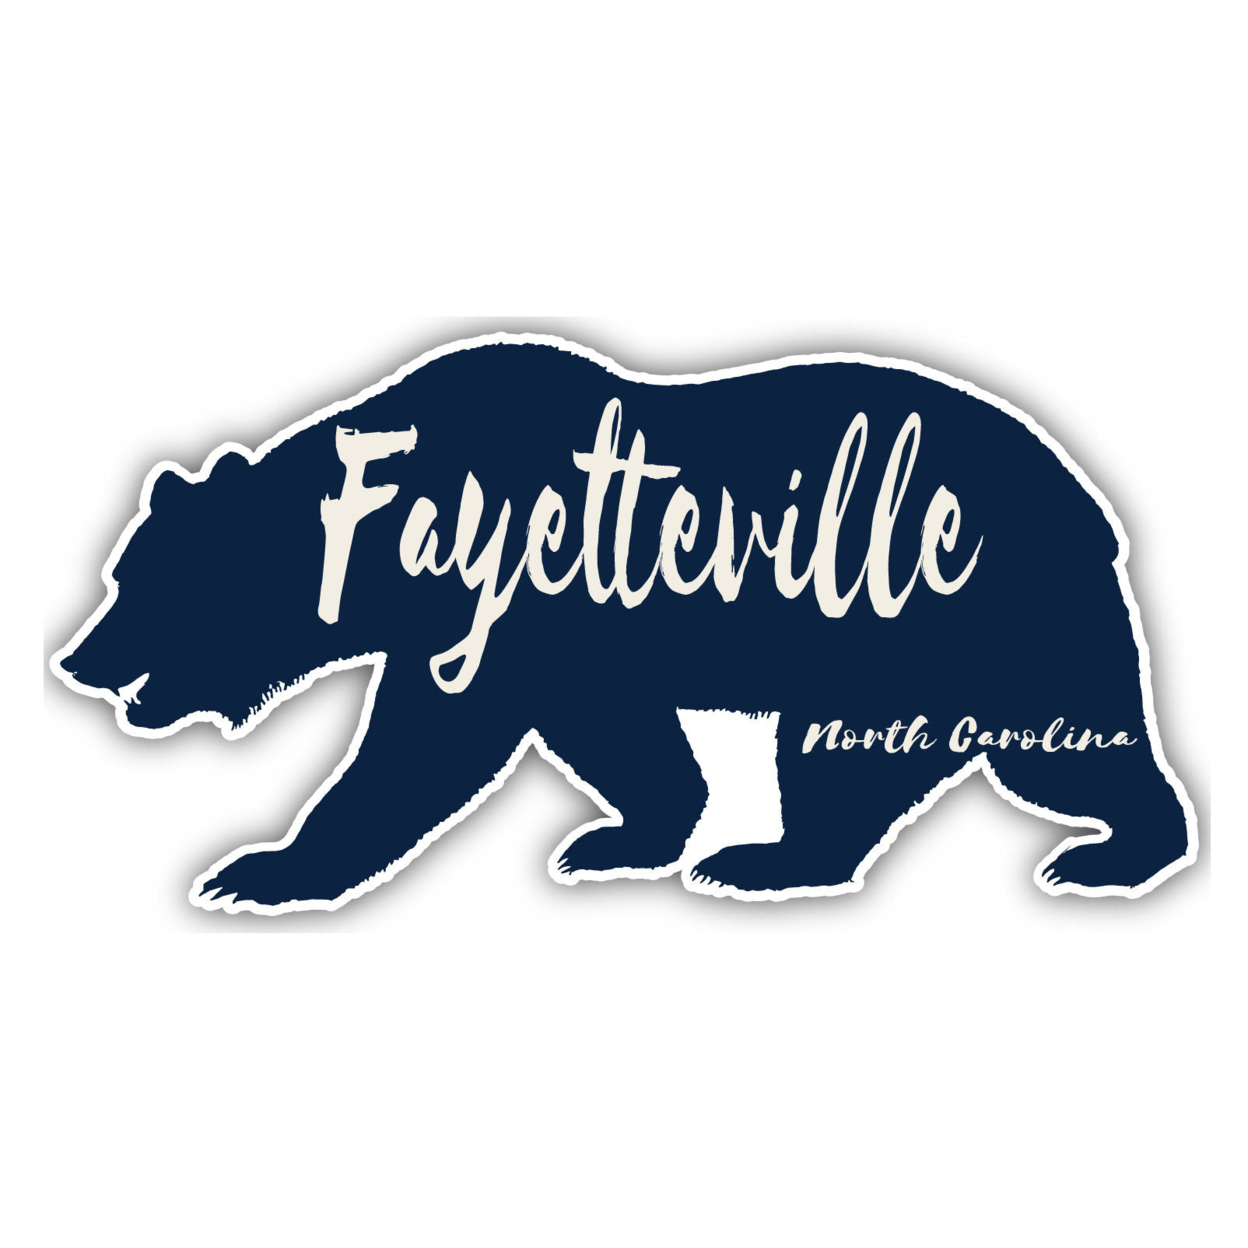 Fayetteville North Carolina Souvenir Decorative Stickers (Choose Theme And Size) - Single Unit, 8-Inch, Tent